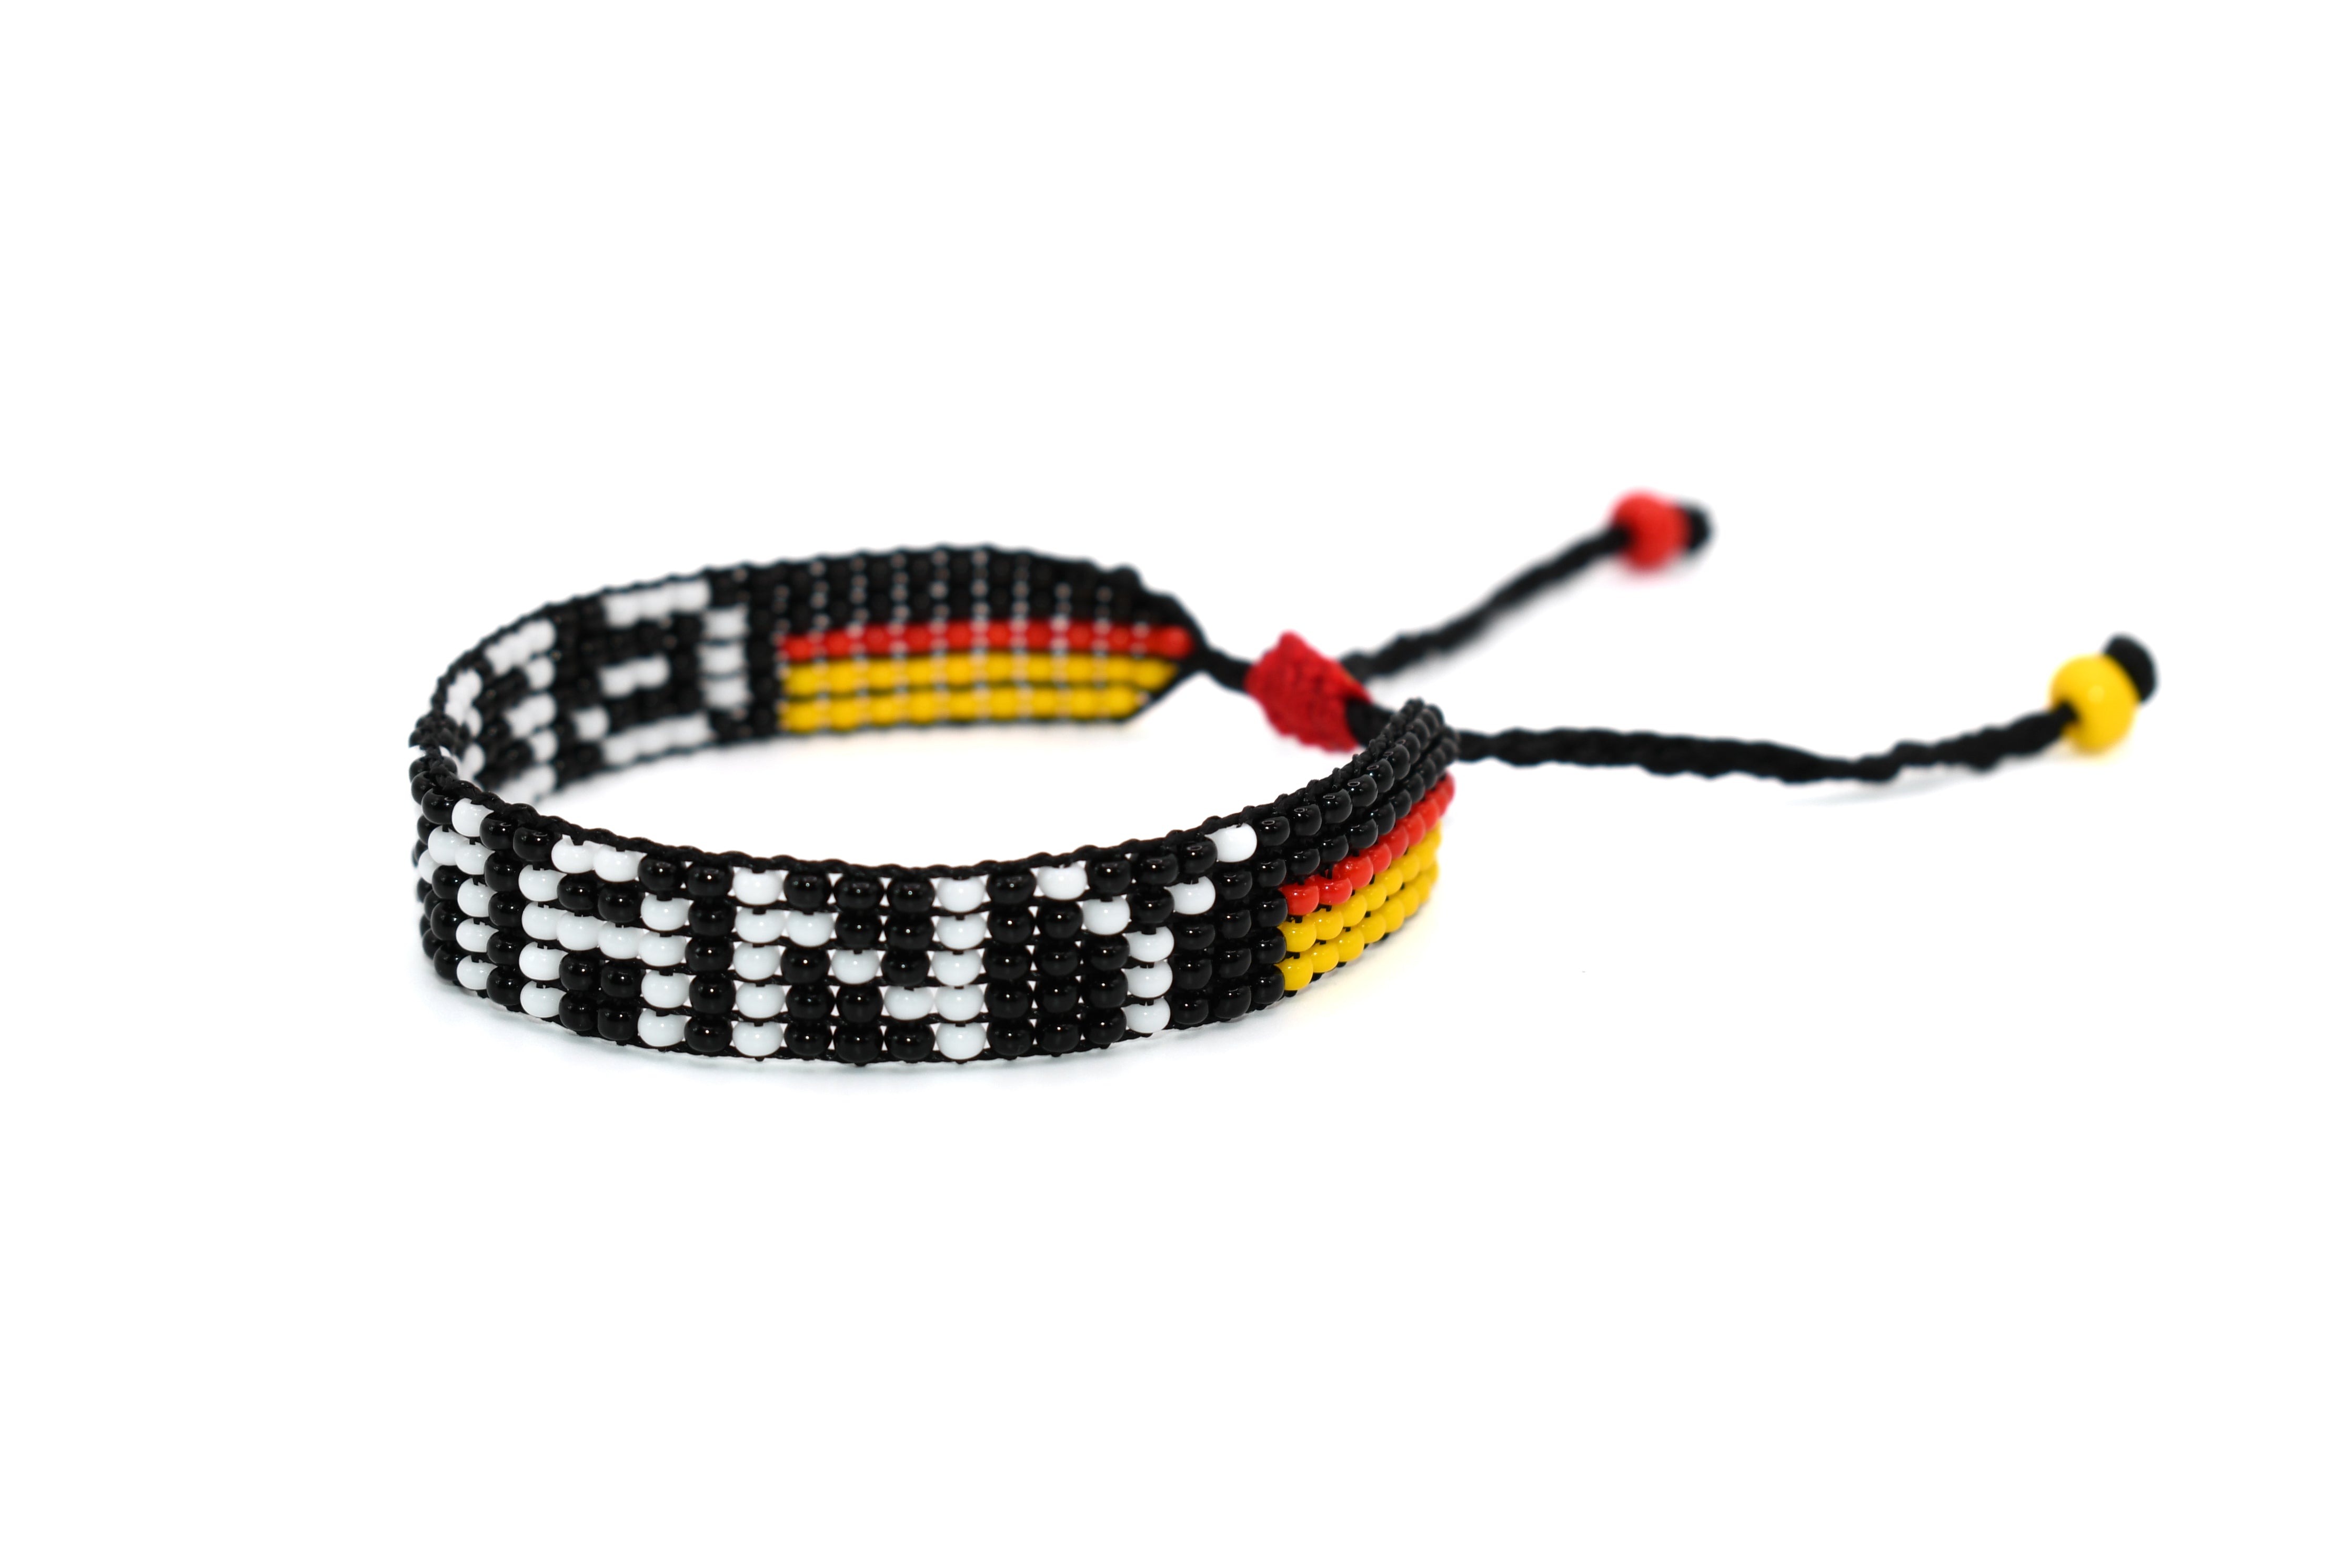 ANGOLA Bracelet/Wrist Band/ANGOLAN Flag Bracelet/ANGOLA flag beaded bracelet  | Masai Curio Shop | Beaded bracelets, Bracelets, Flag beads